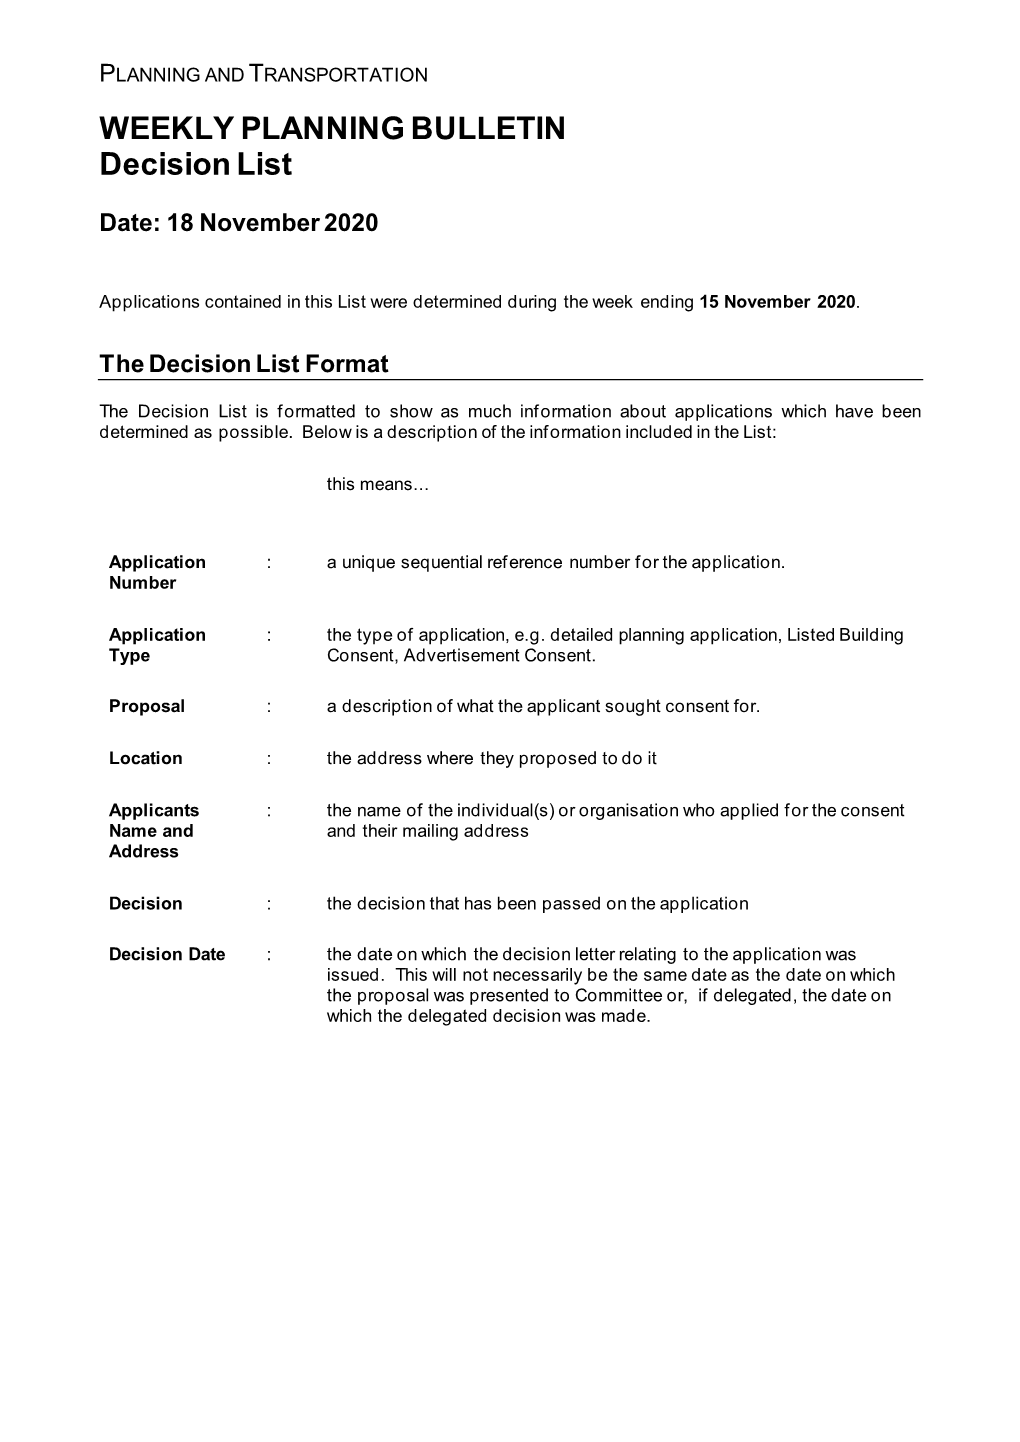 Planning Applications Determined 15 November 2020